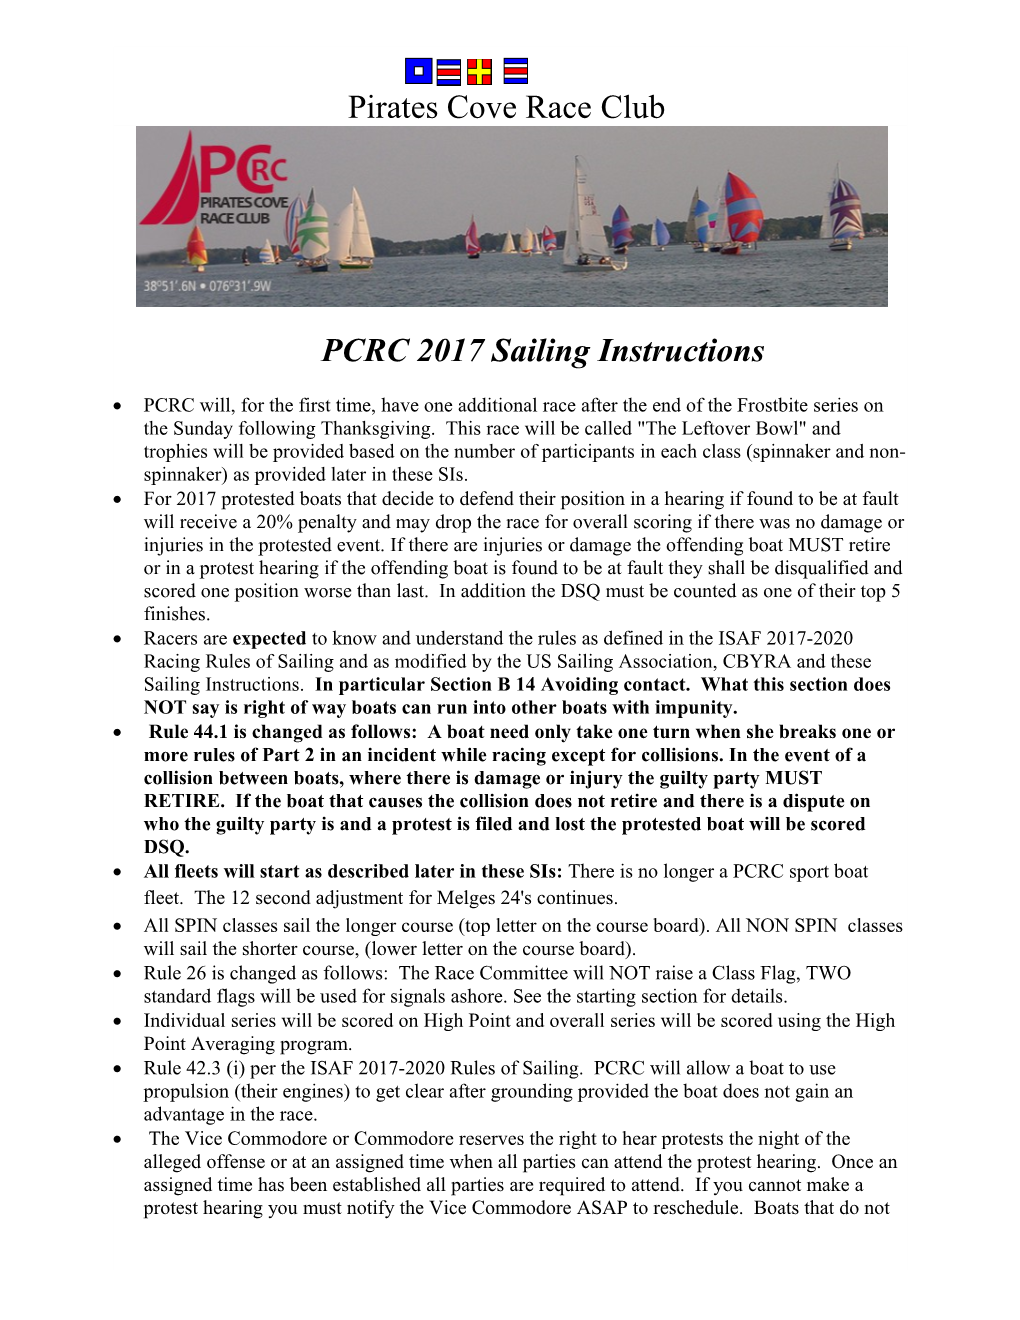 PCRC 2017 Sailing Instructions